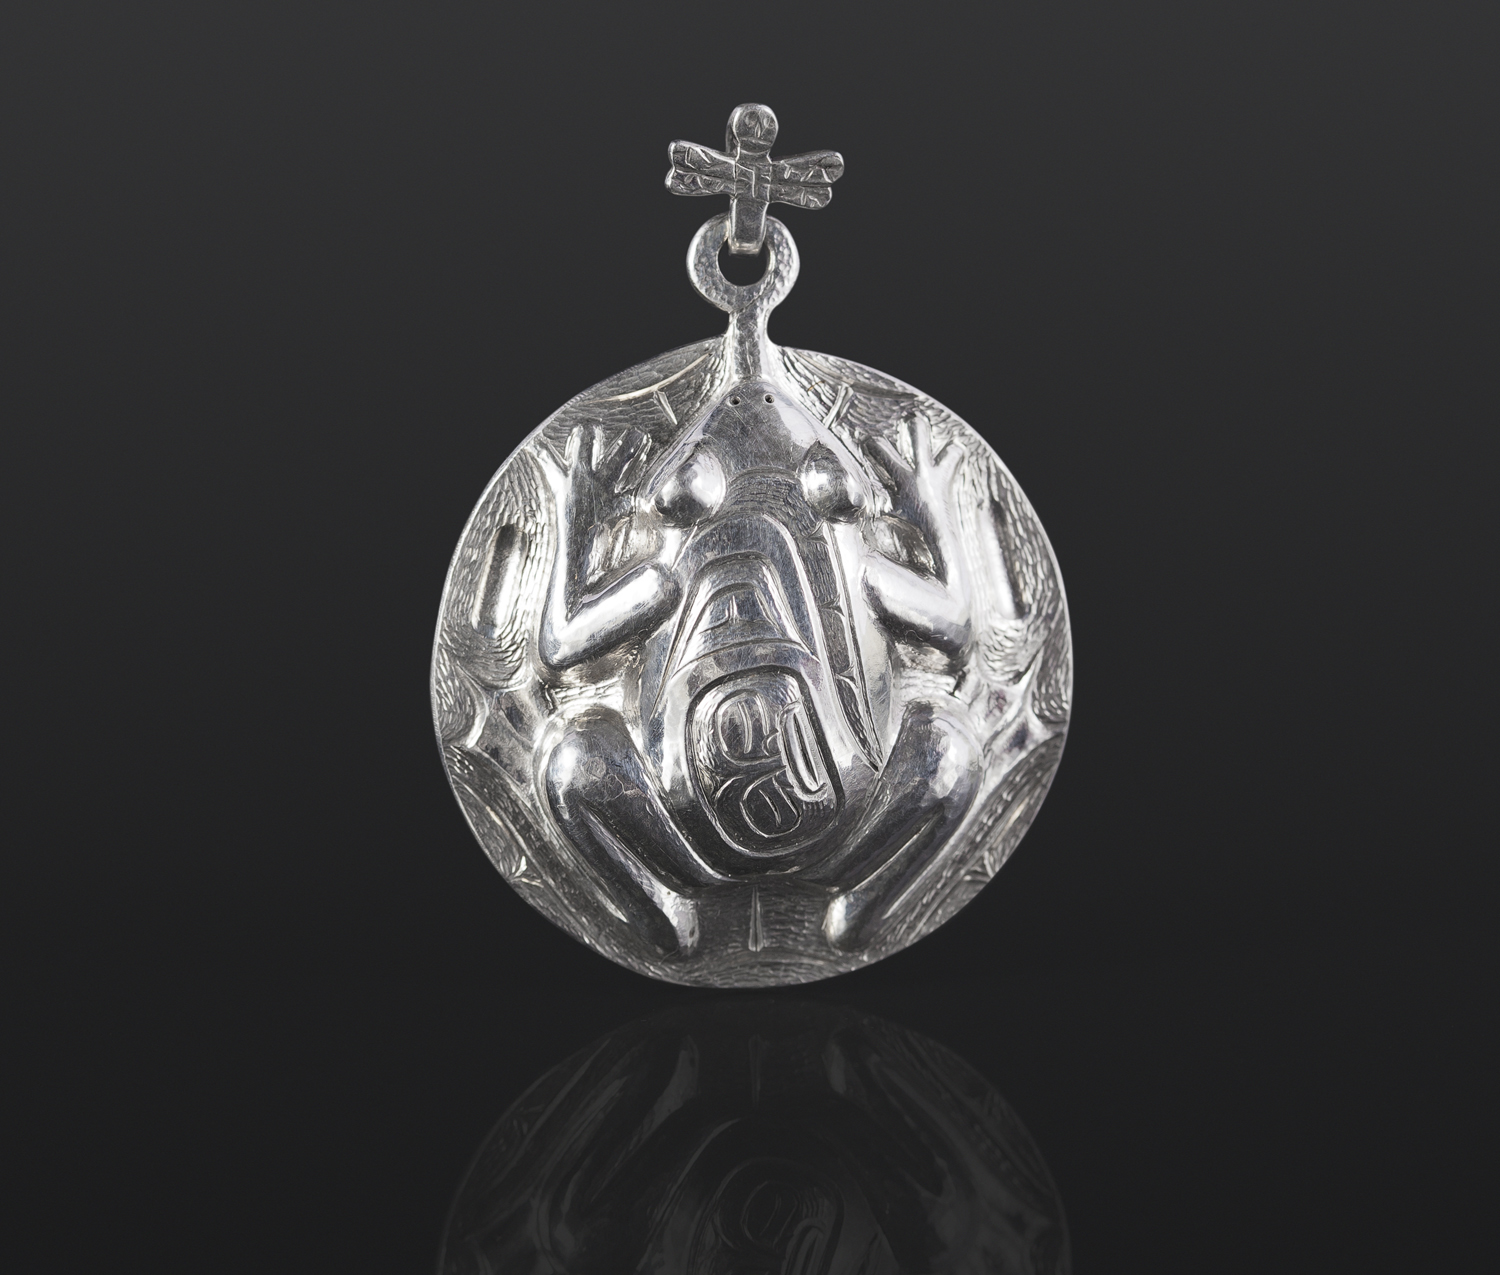 the catch pendant dragonfly frog Gus Cook Kwakwaka'wakw silver Repoussé jewelry pendant native art northwest coast 2 x 1 1/2 1400